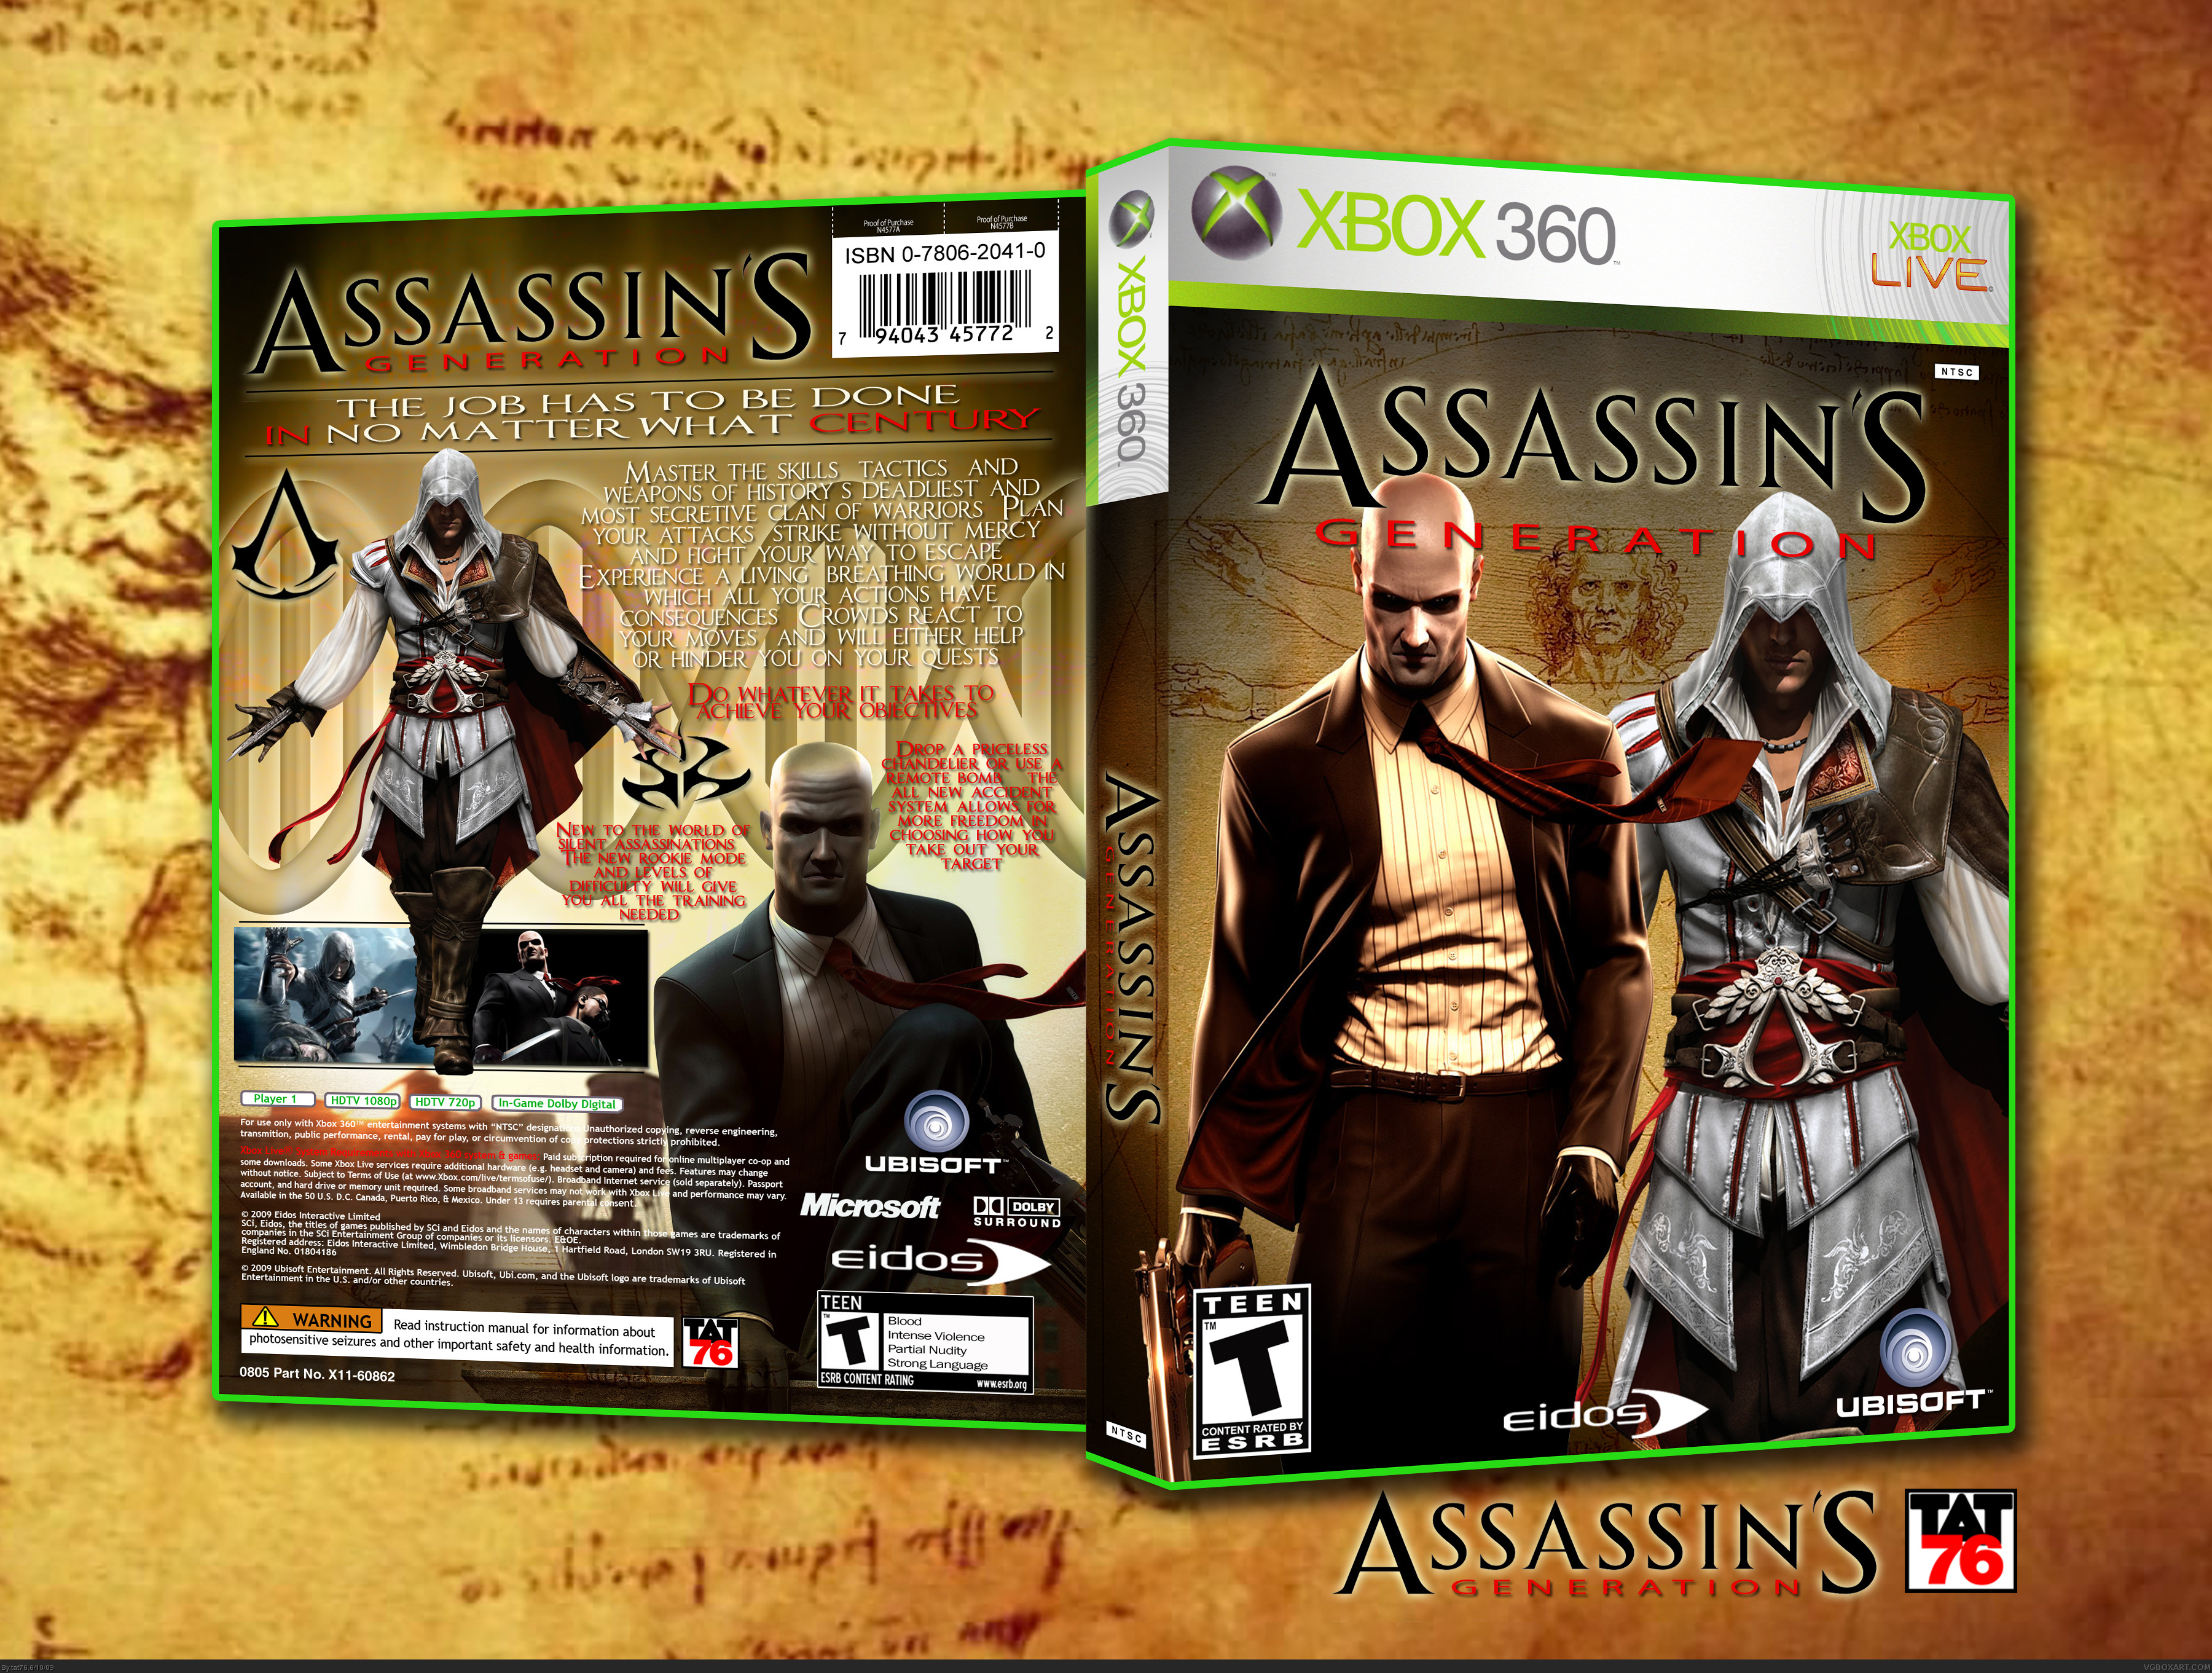 Assassin's Generation box cover